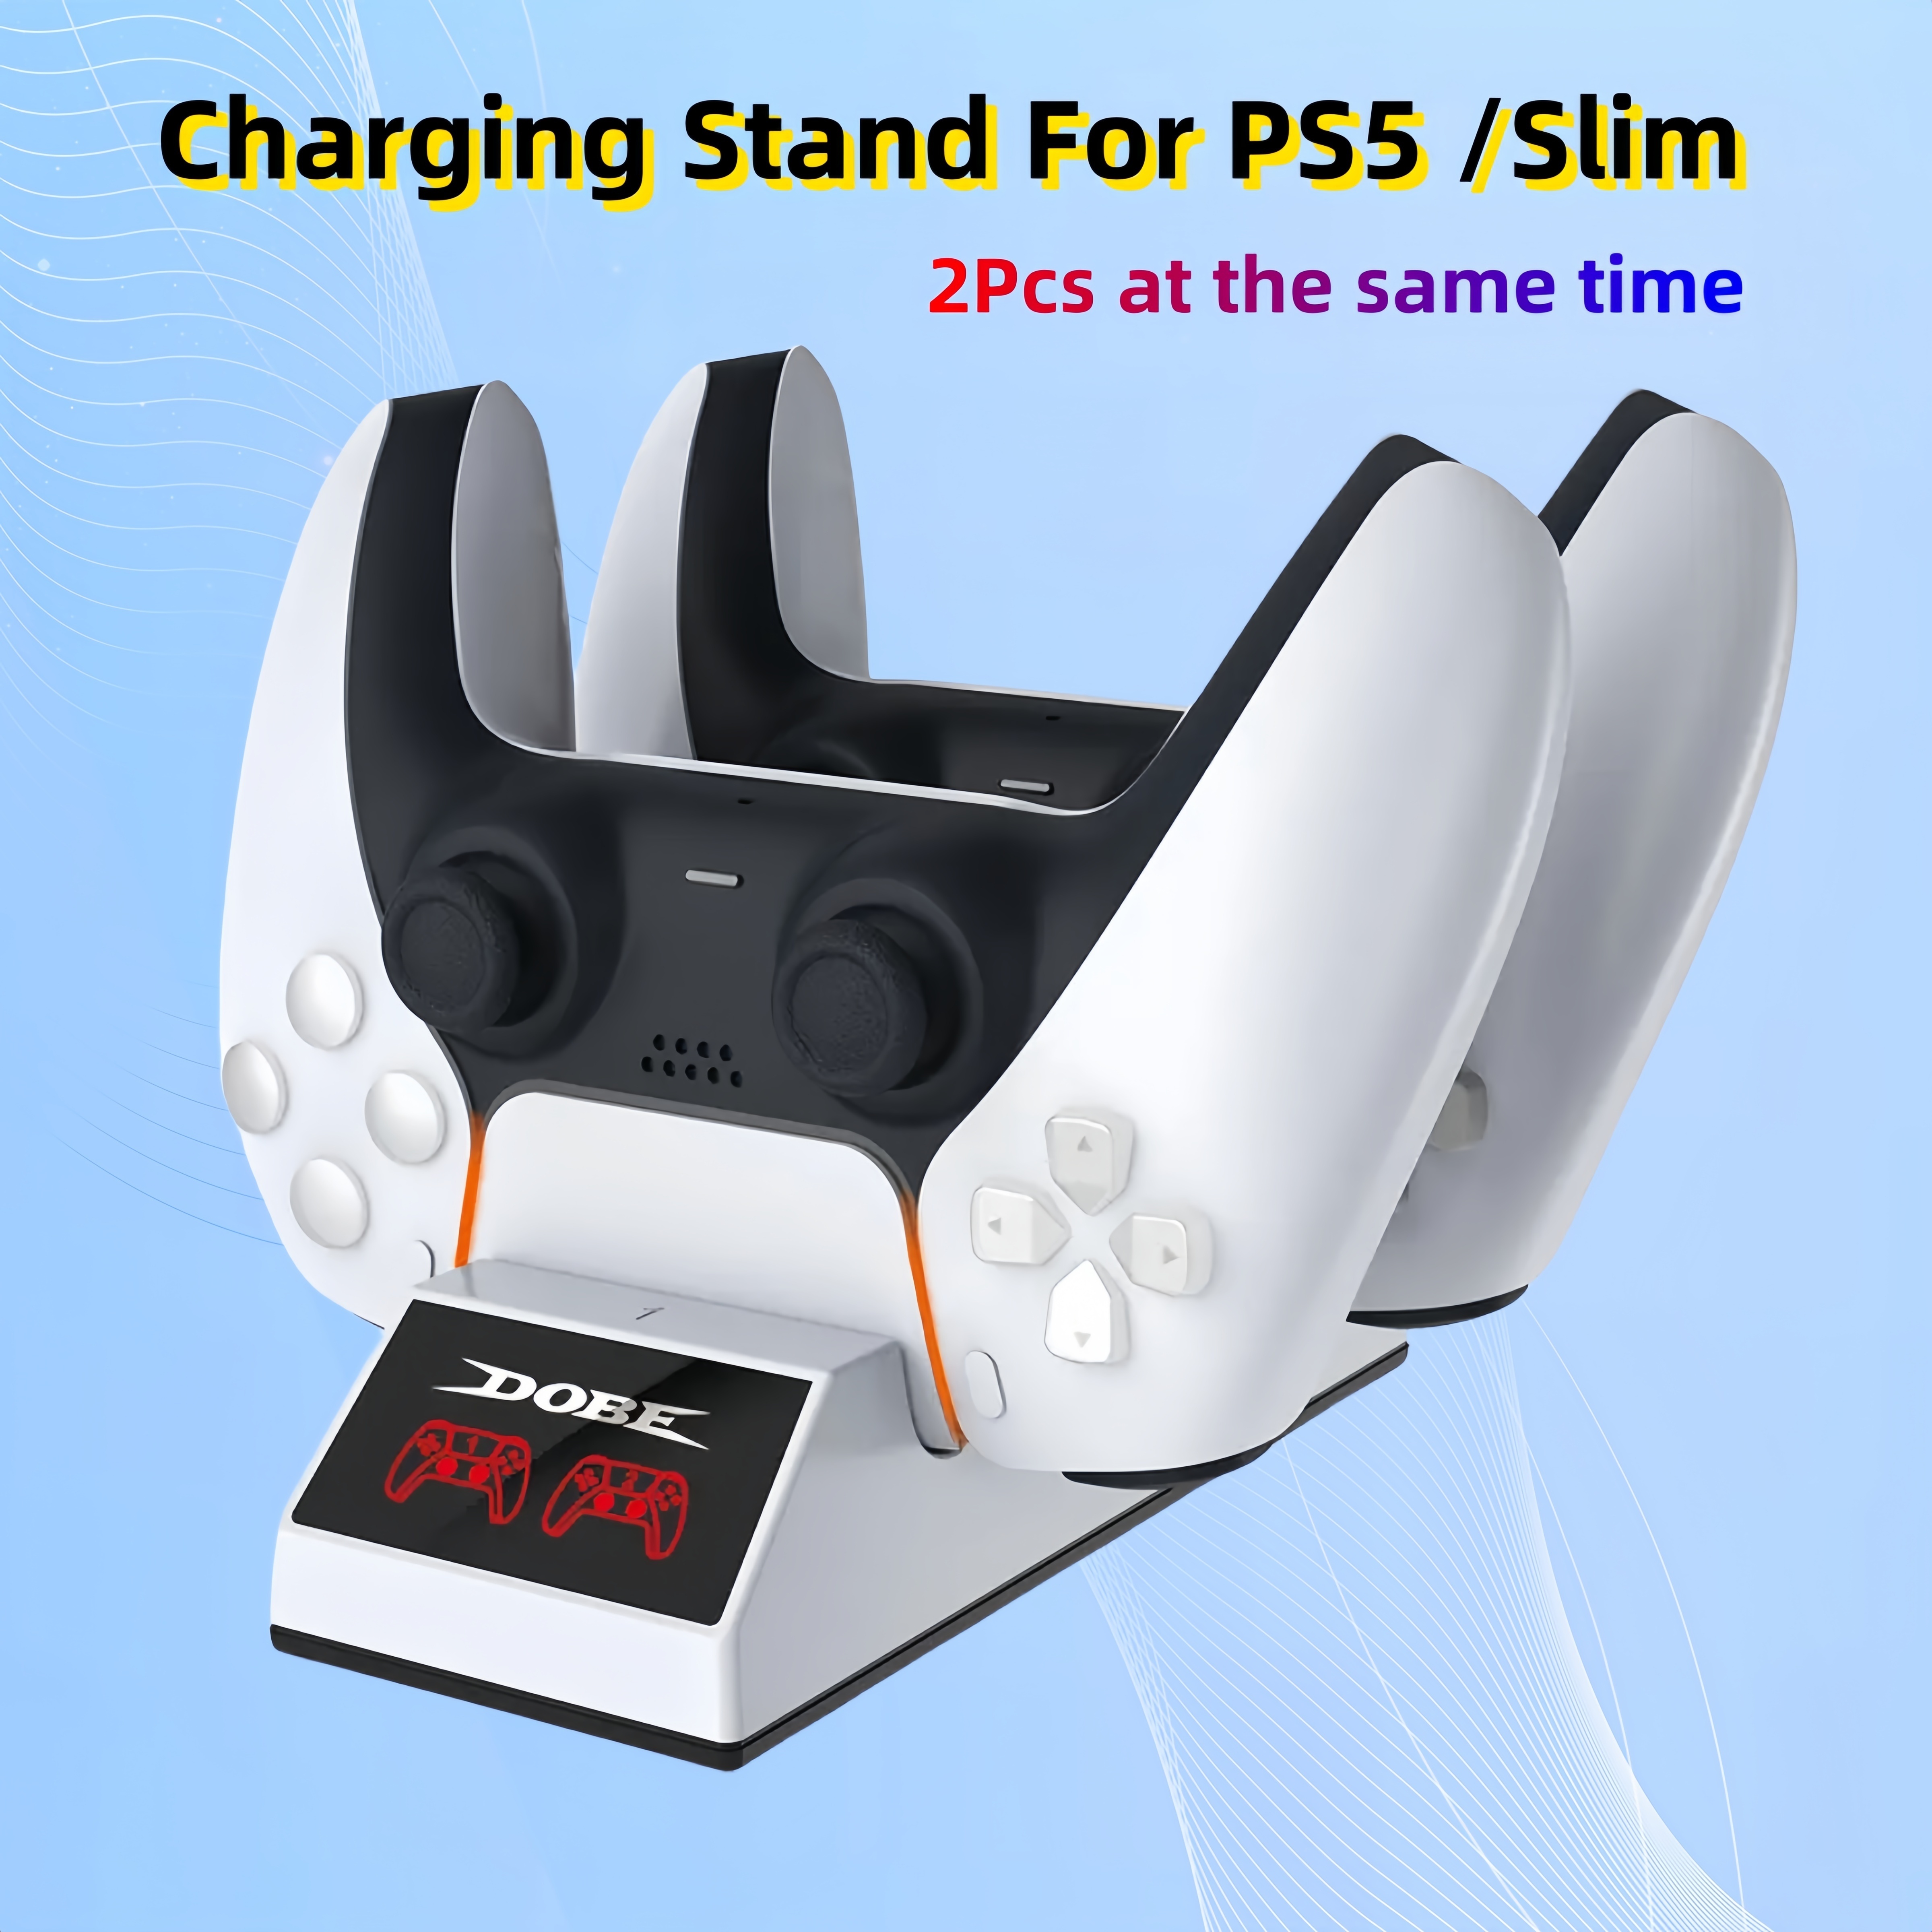 Base de control delgada para PS5 con luz ambiental RGB, base de  enfriamiento multifuncional para accesorios delgados de PS5, base de  iluminación